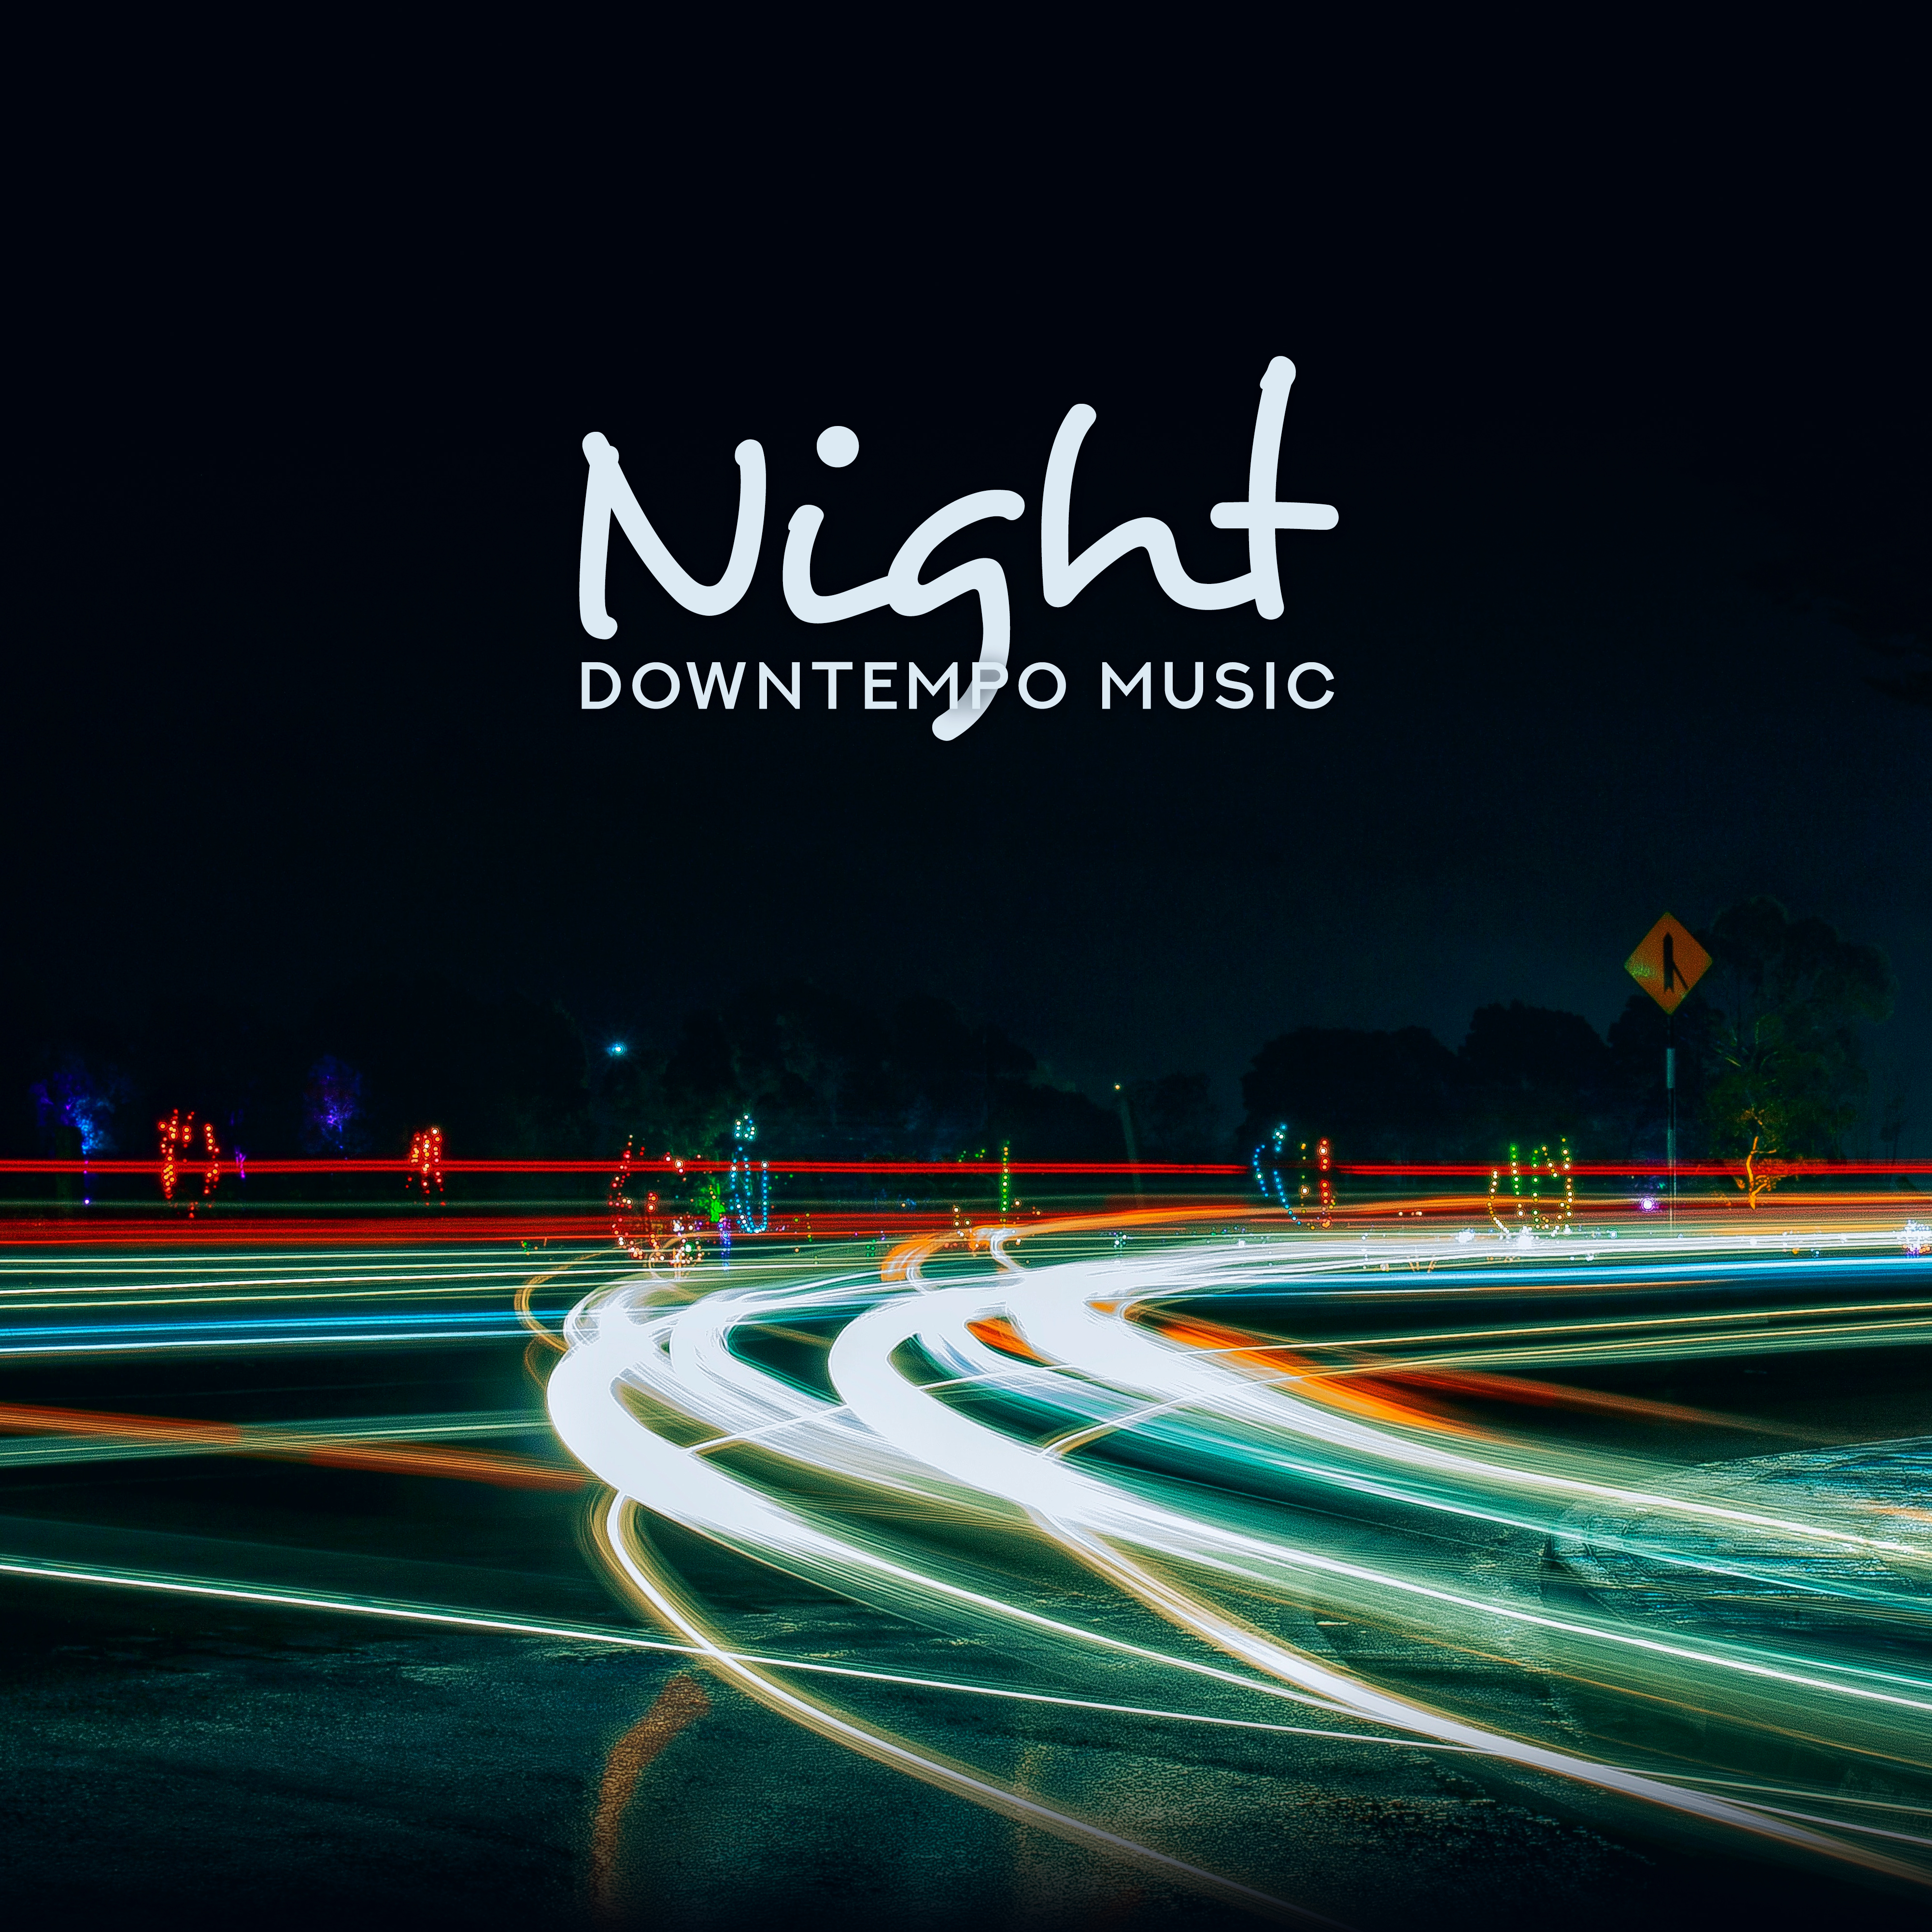 Night Downtempo Music